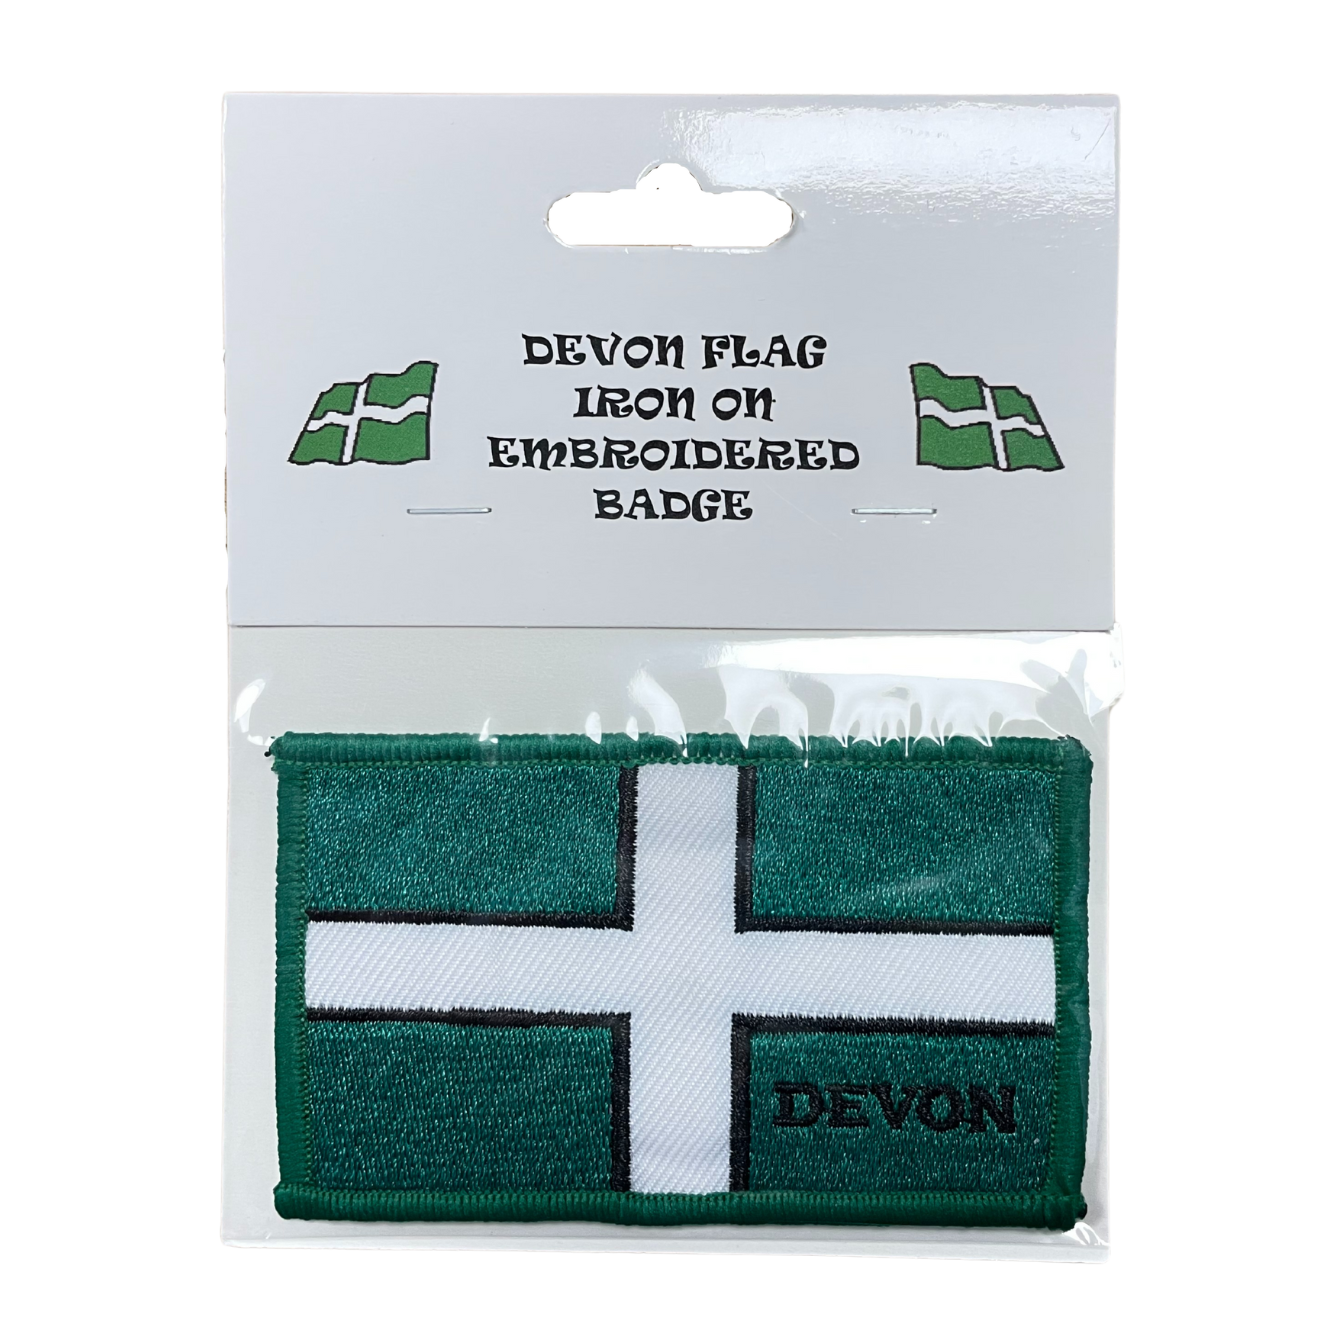 Devon Flag Iron On Embroidered Badge